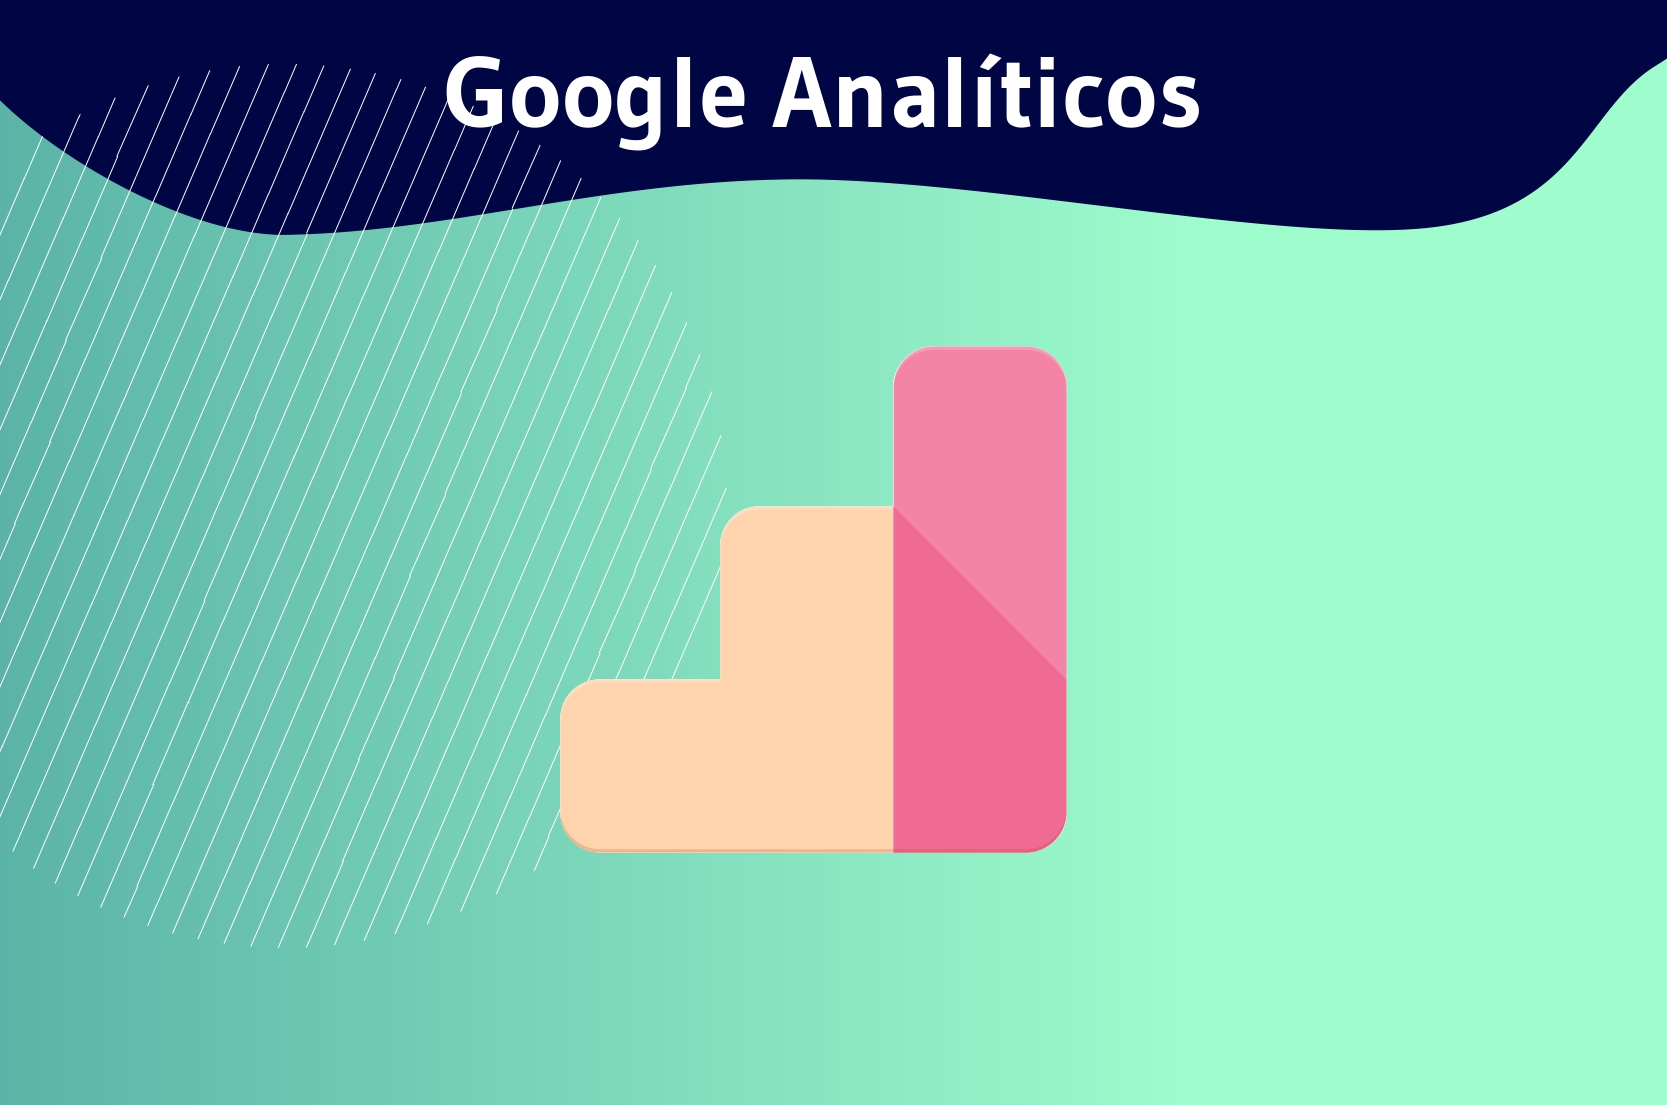 Google Analíticos